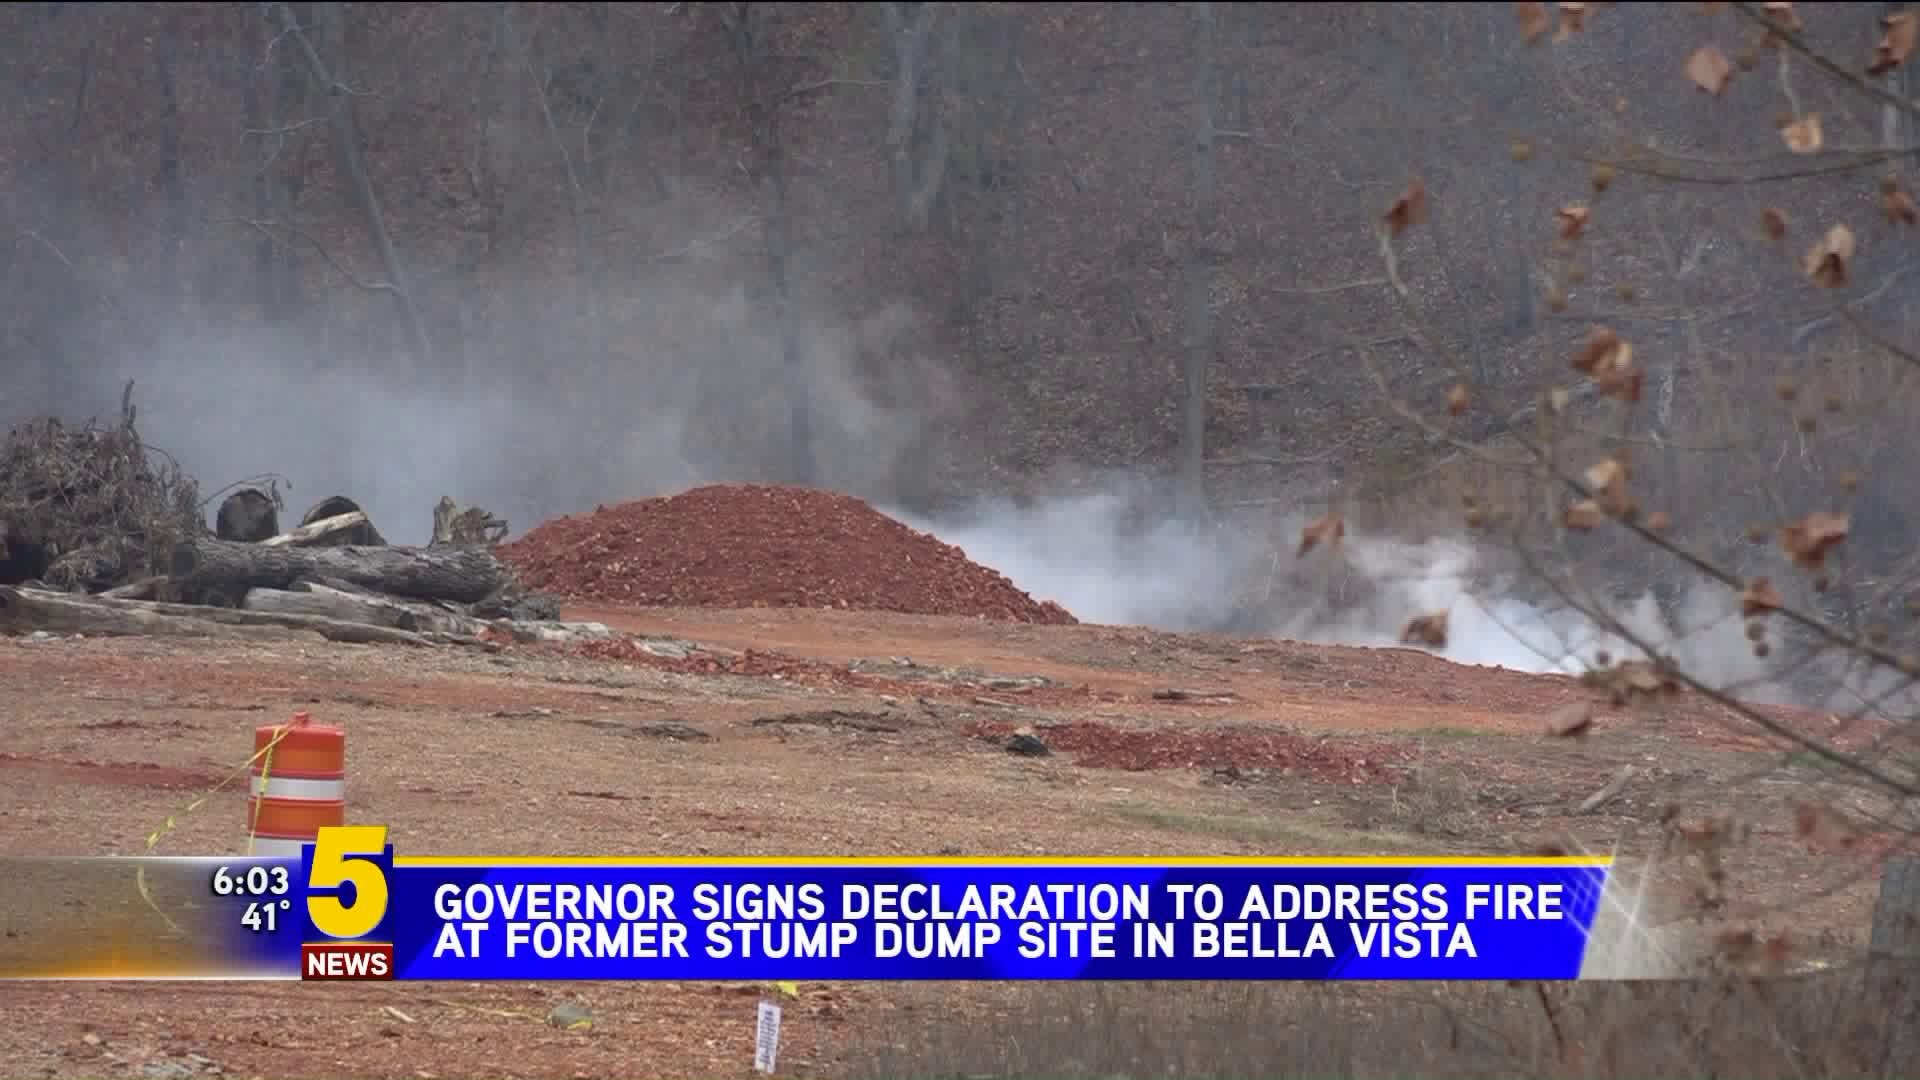 Gov signs declaration to address fire at former stump dump in Bella Vista